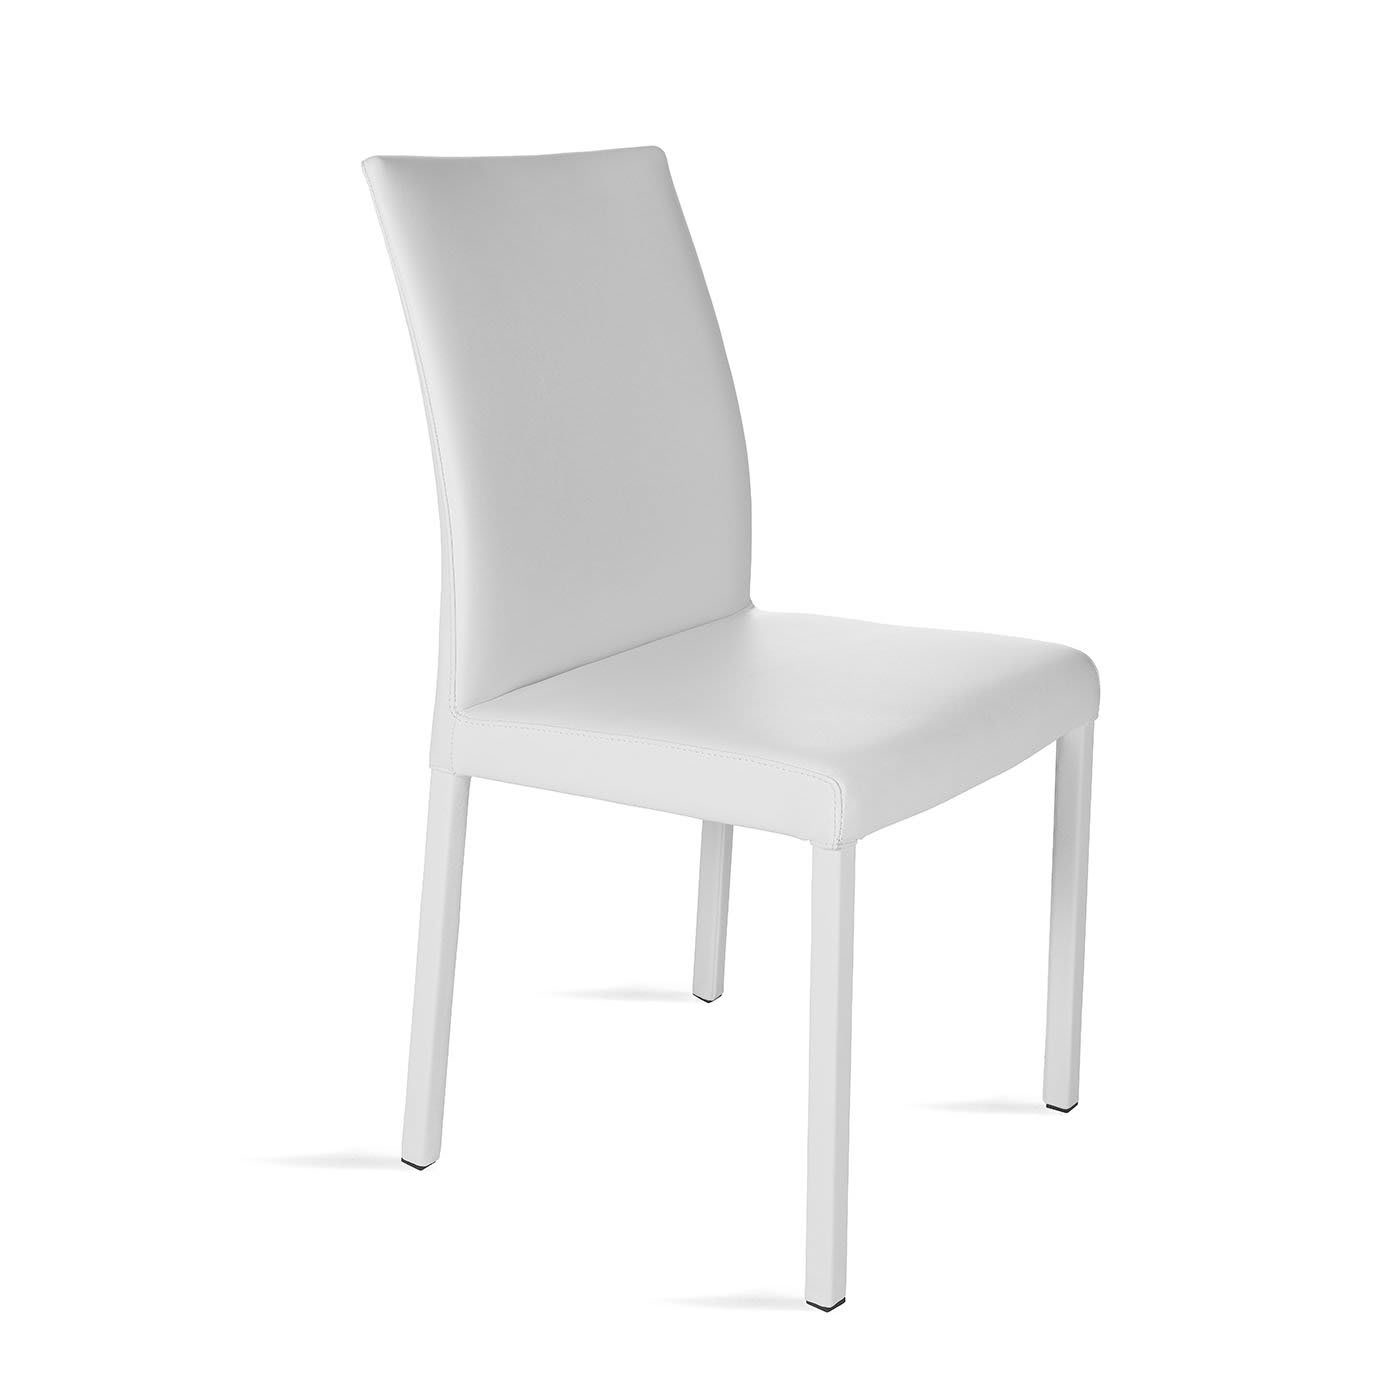 Possagno White Leather XL Chair - Trevisan Asolo